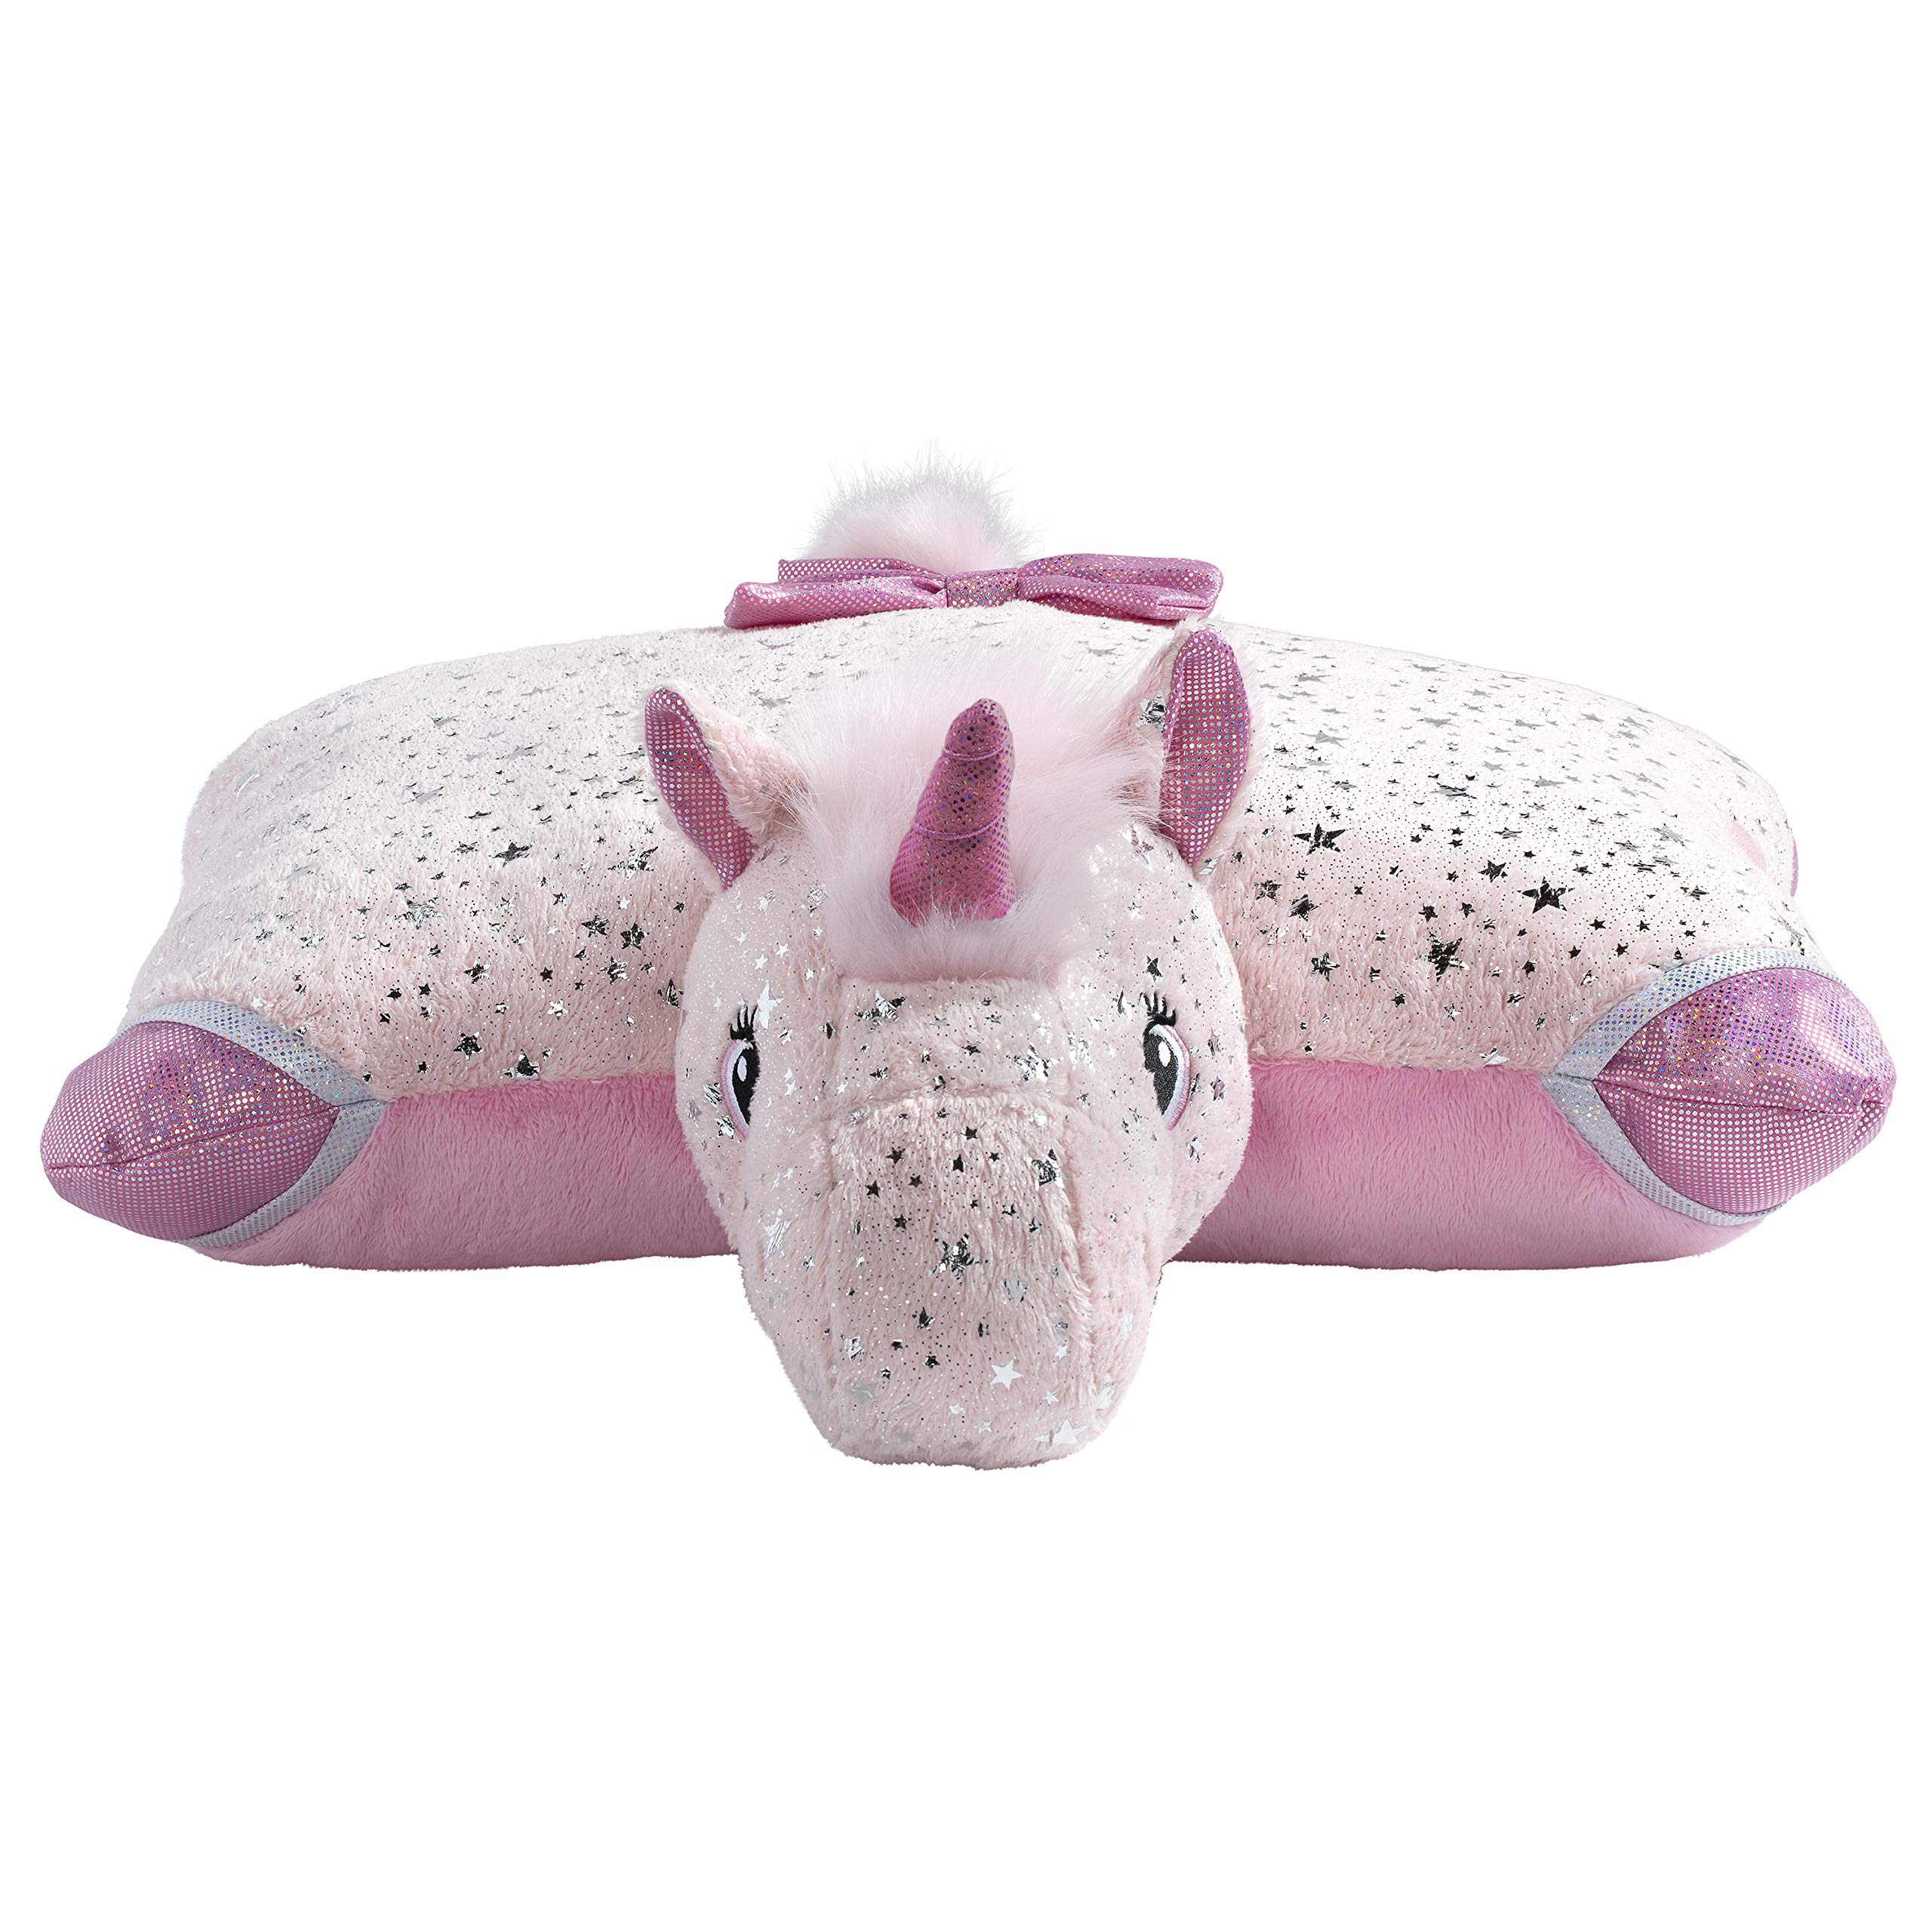 Pillow Pets Originals Sparkly Pink Unicorn Stuffed Animal Plush Toy